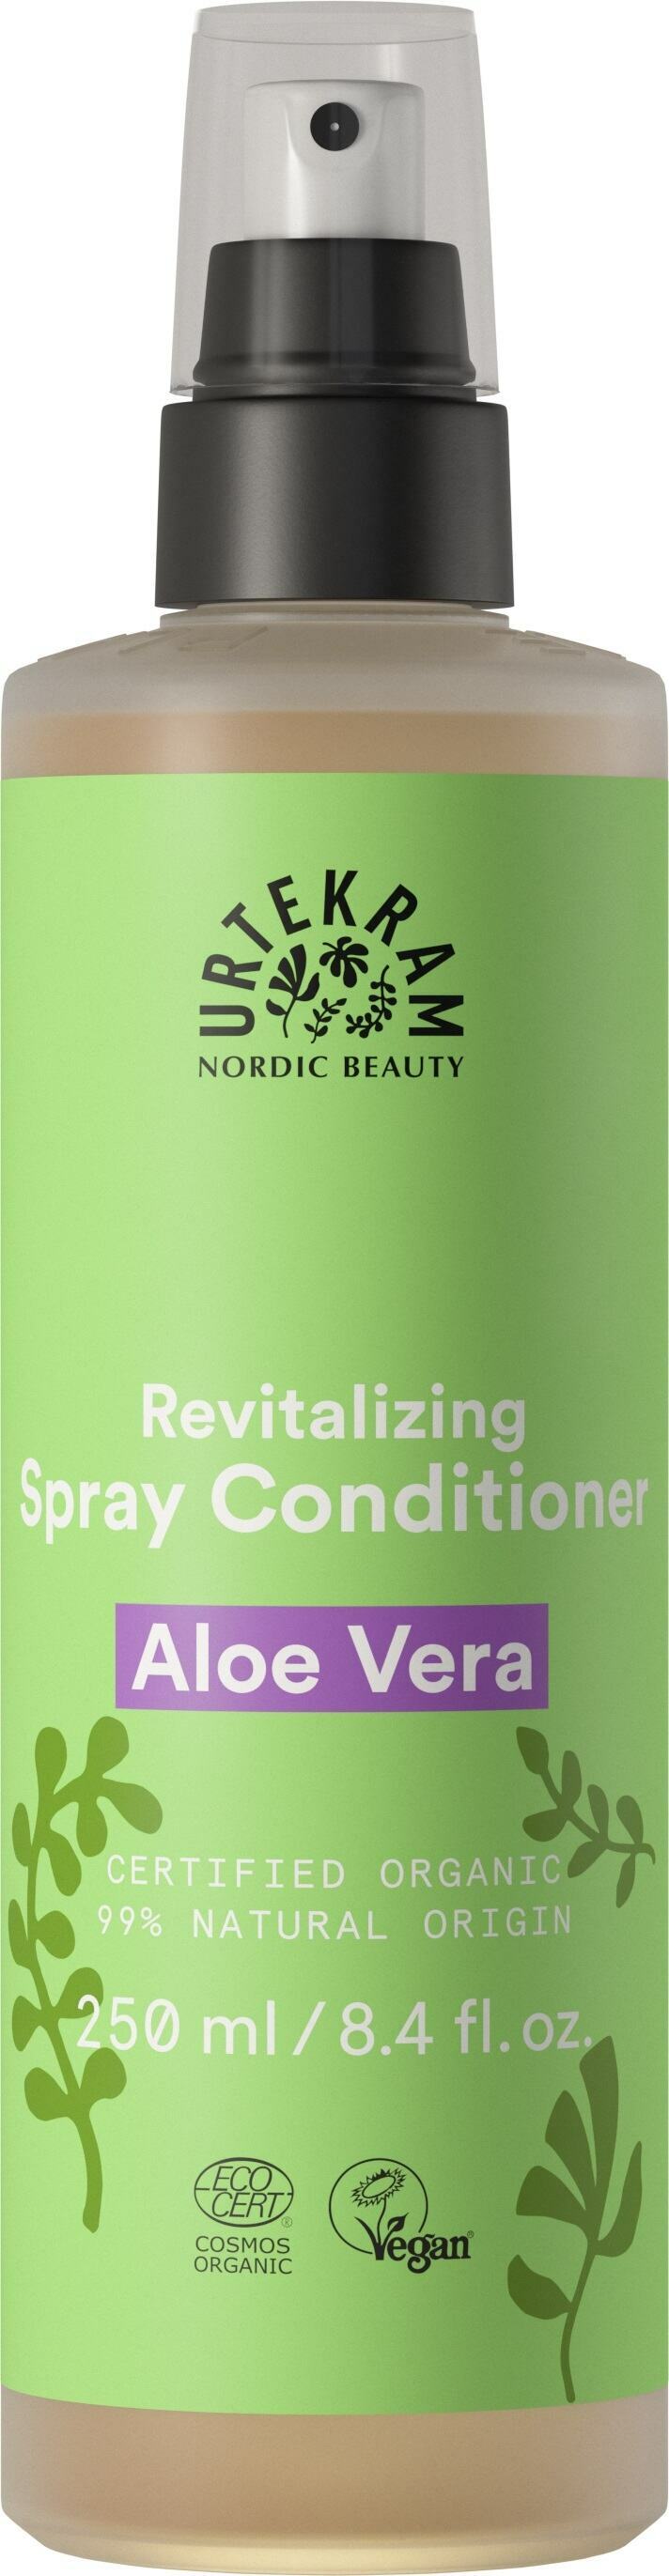 Urtekram Organic Aloe Vera Conditioner Spray 250ml